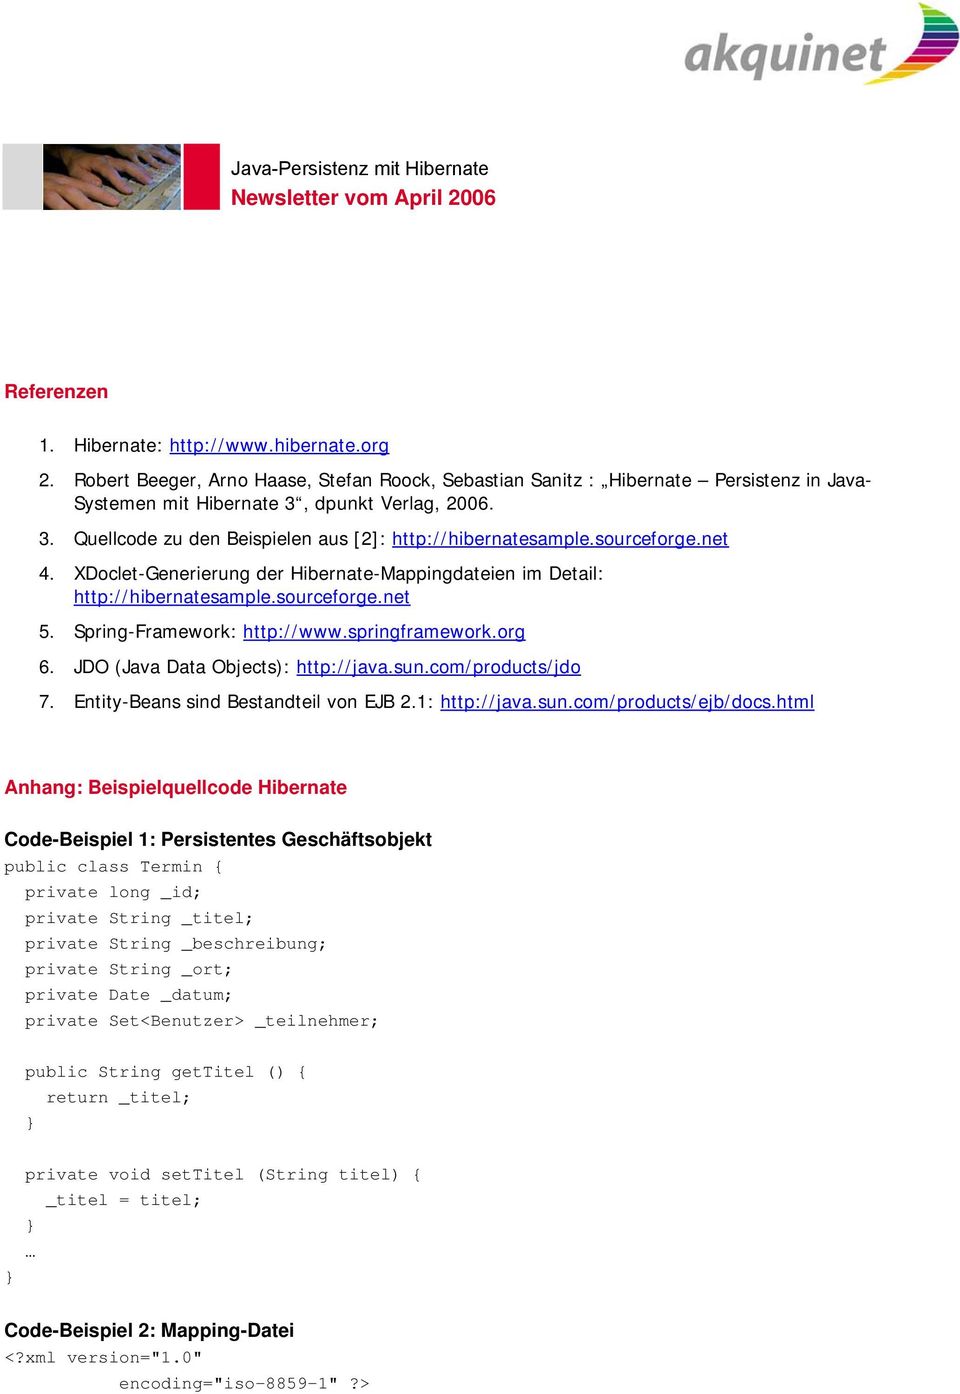 Spring-Framework: http://www.springframework.org 6. JDO (Java Data Objects): http://java.sun.com/products/jdo 7. Entity-Beans sind Bestandteil von EJB 2.1: http://java.sun.com/products/ejb/docs.